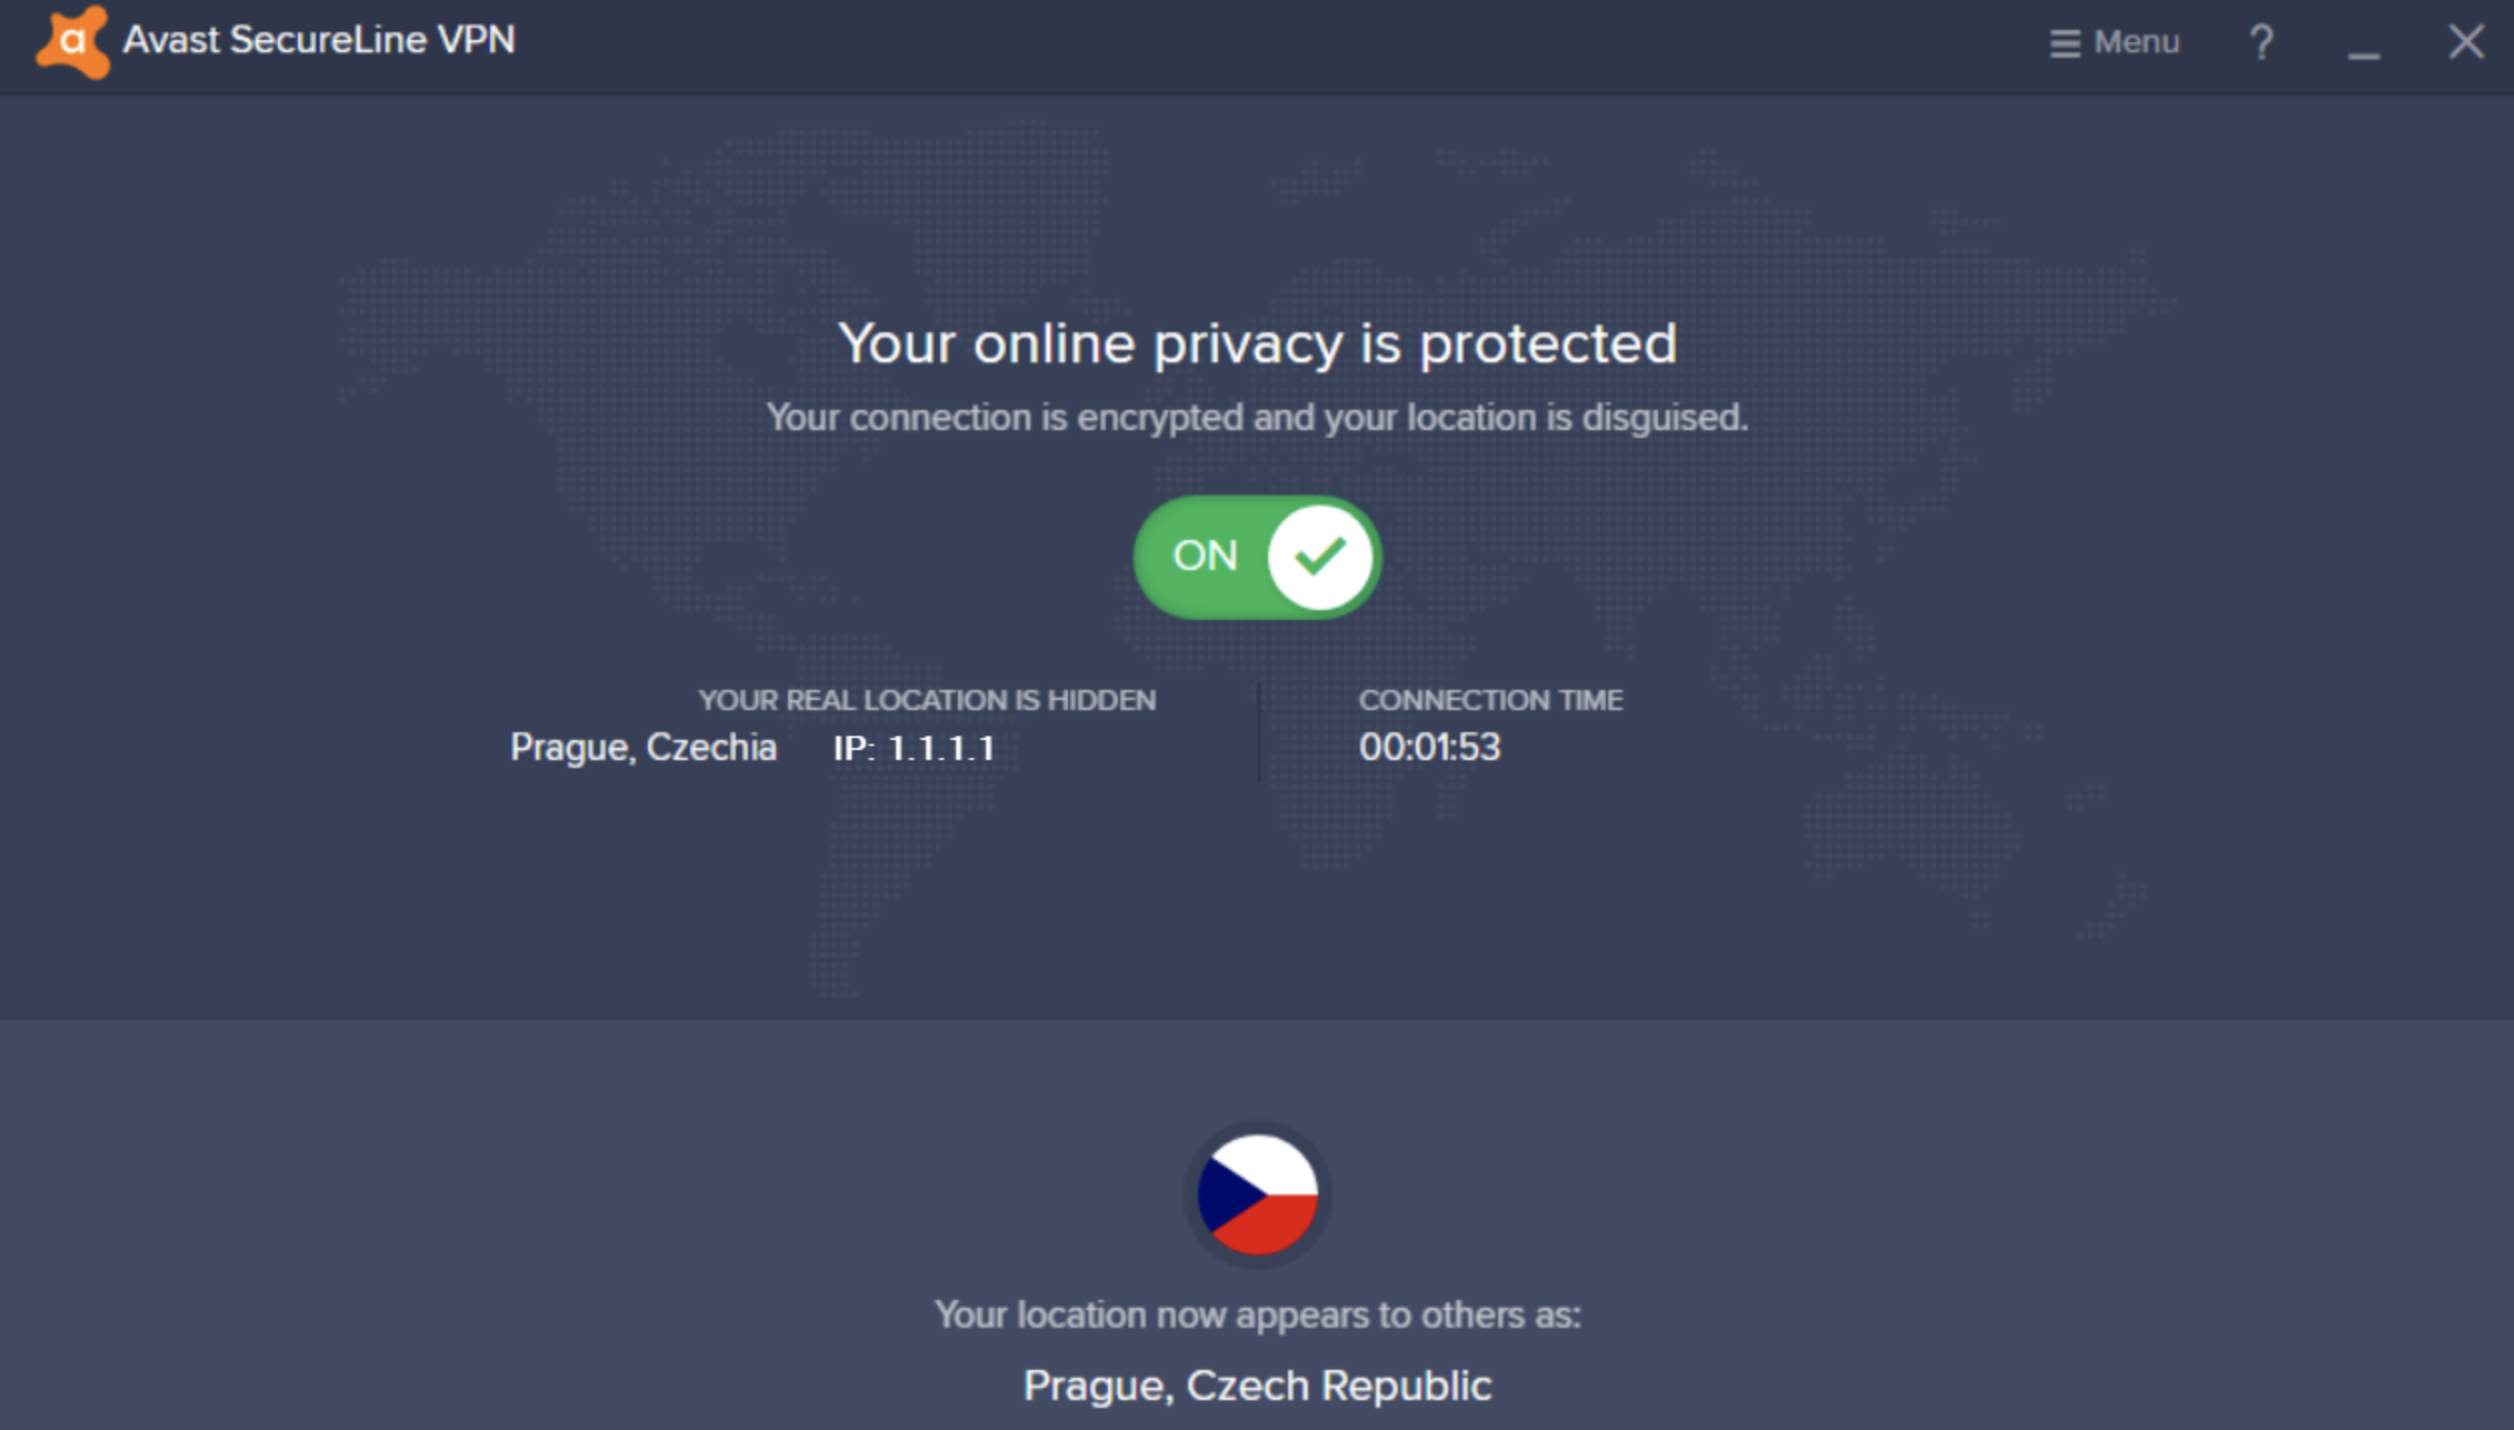 Avast secureline vpn windows app